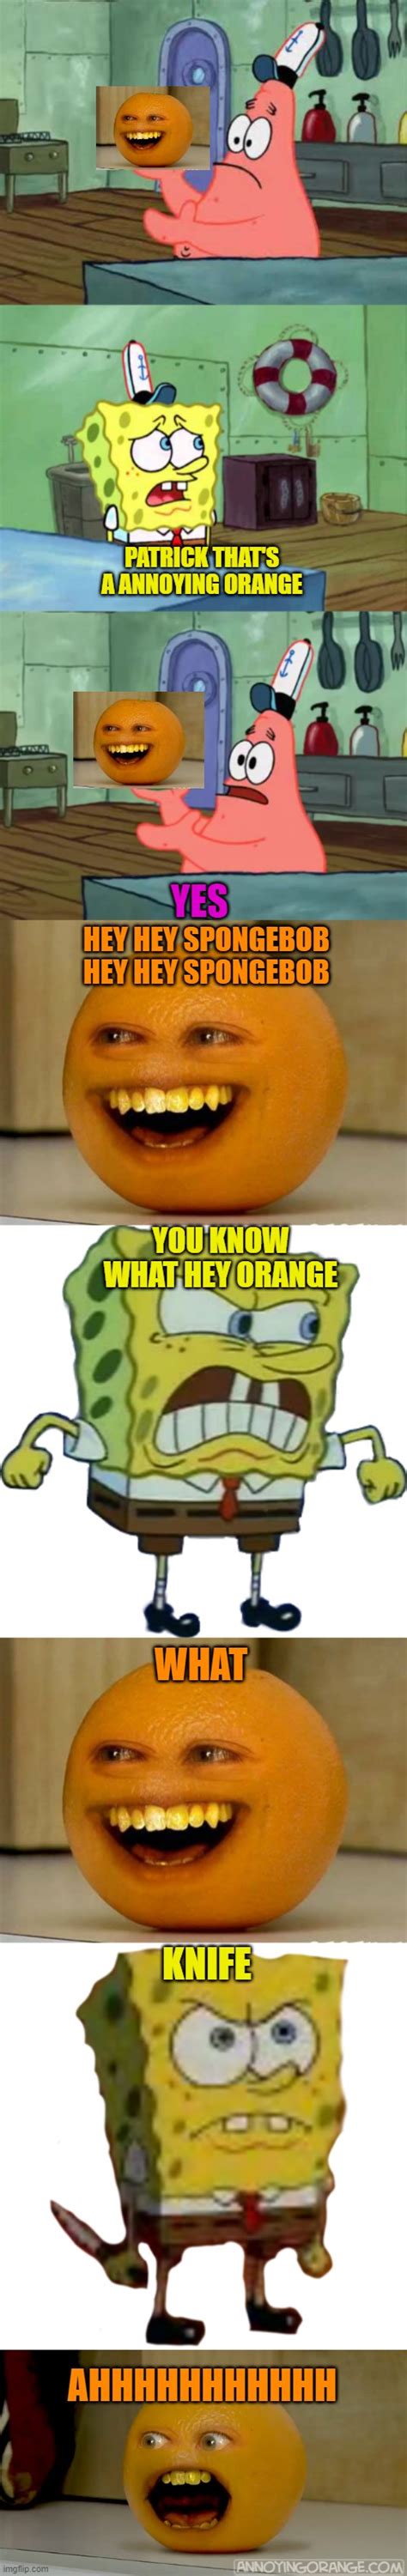 Patrick Thats A Annoying Orangespongebob Kill Orange Imgflip